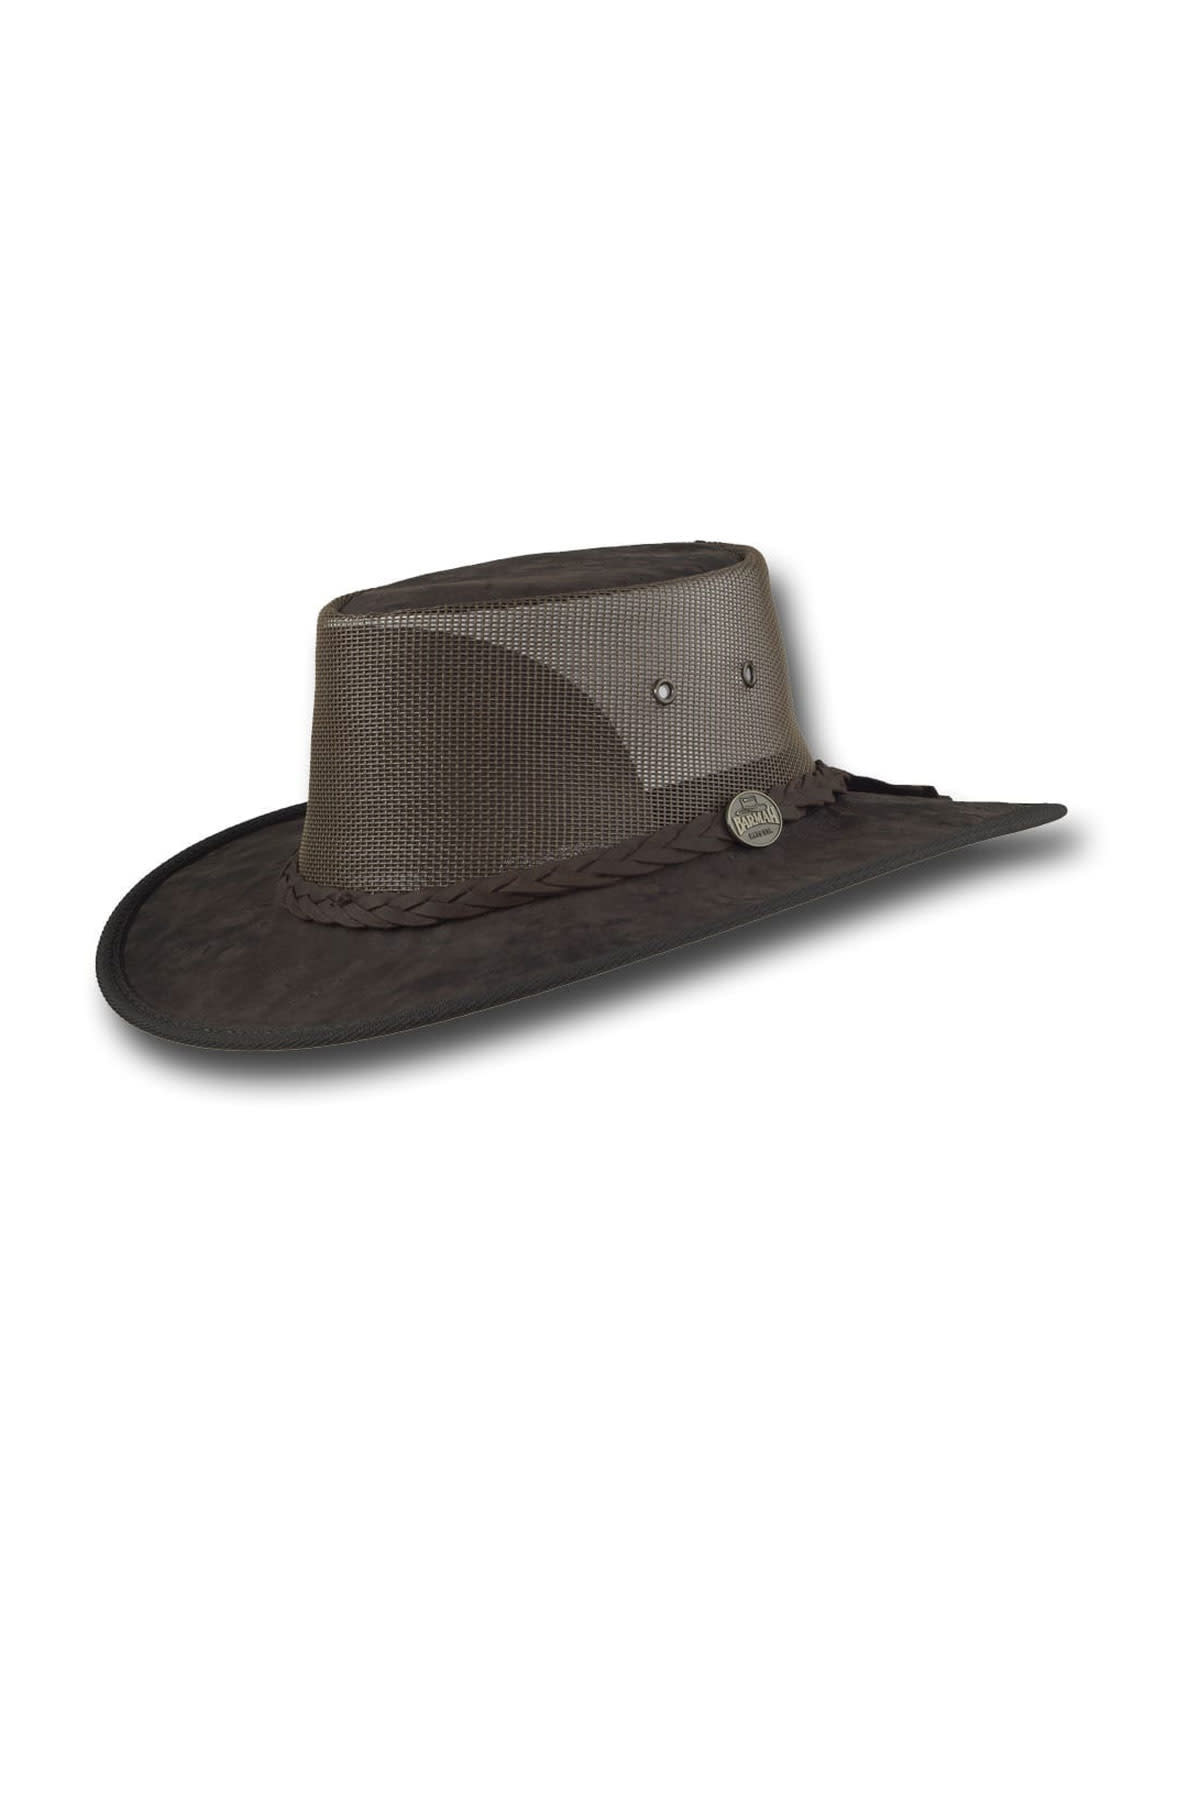 Barmah Australian Leather Cooler Hat  Roxann's Hats of Fort Langley -  Roxanns Hats of Fort Langley